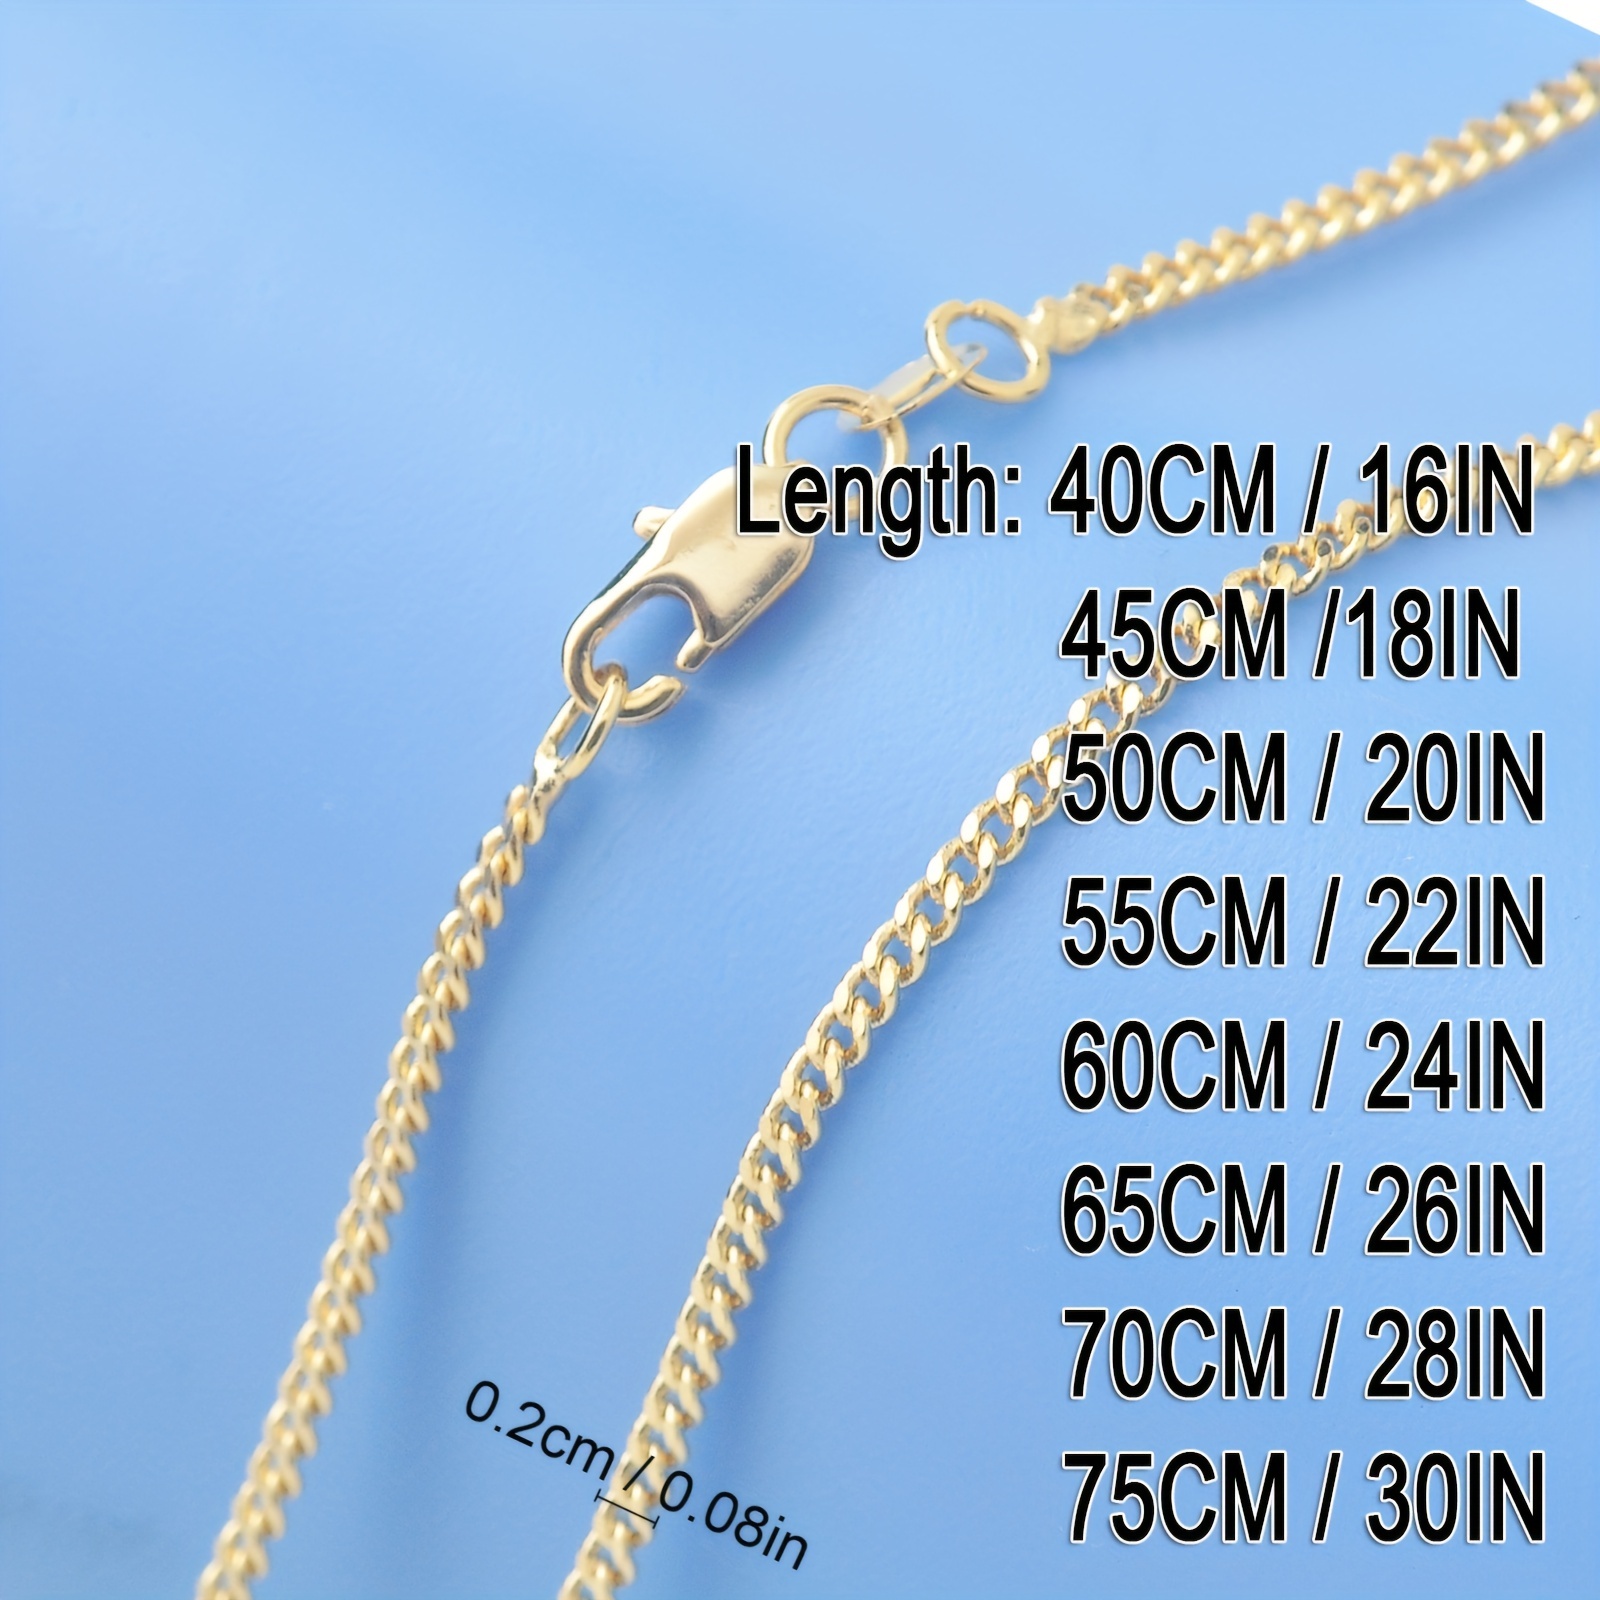 12Pcs/Pack 45cm Necklace Chains Bulk For DIY Making Materials